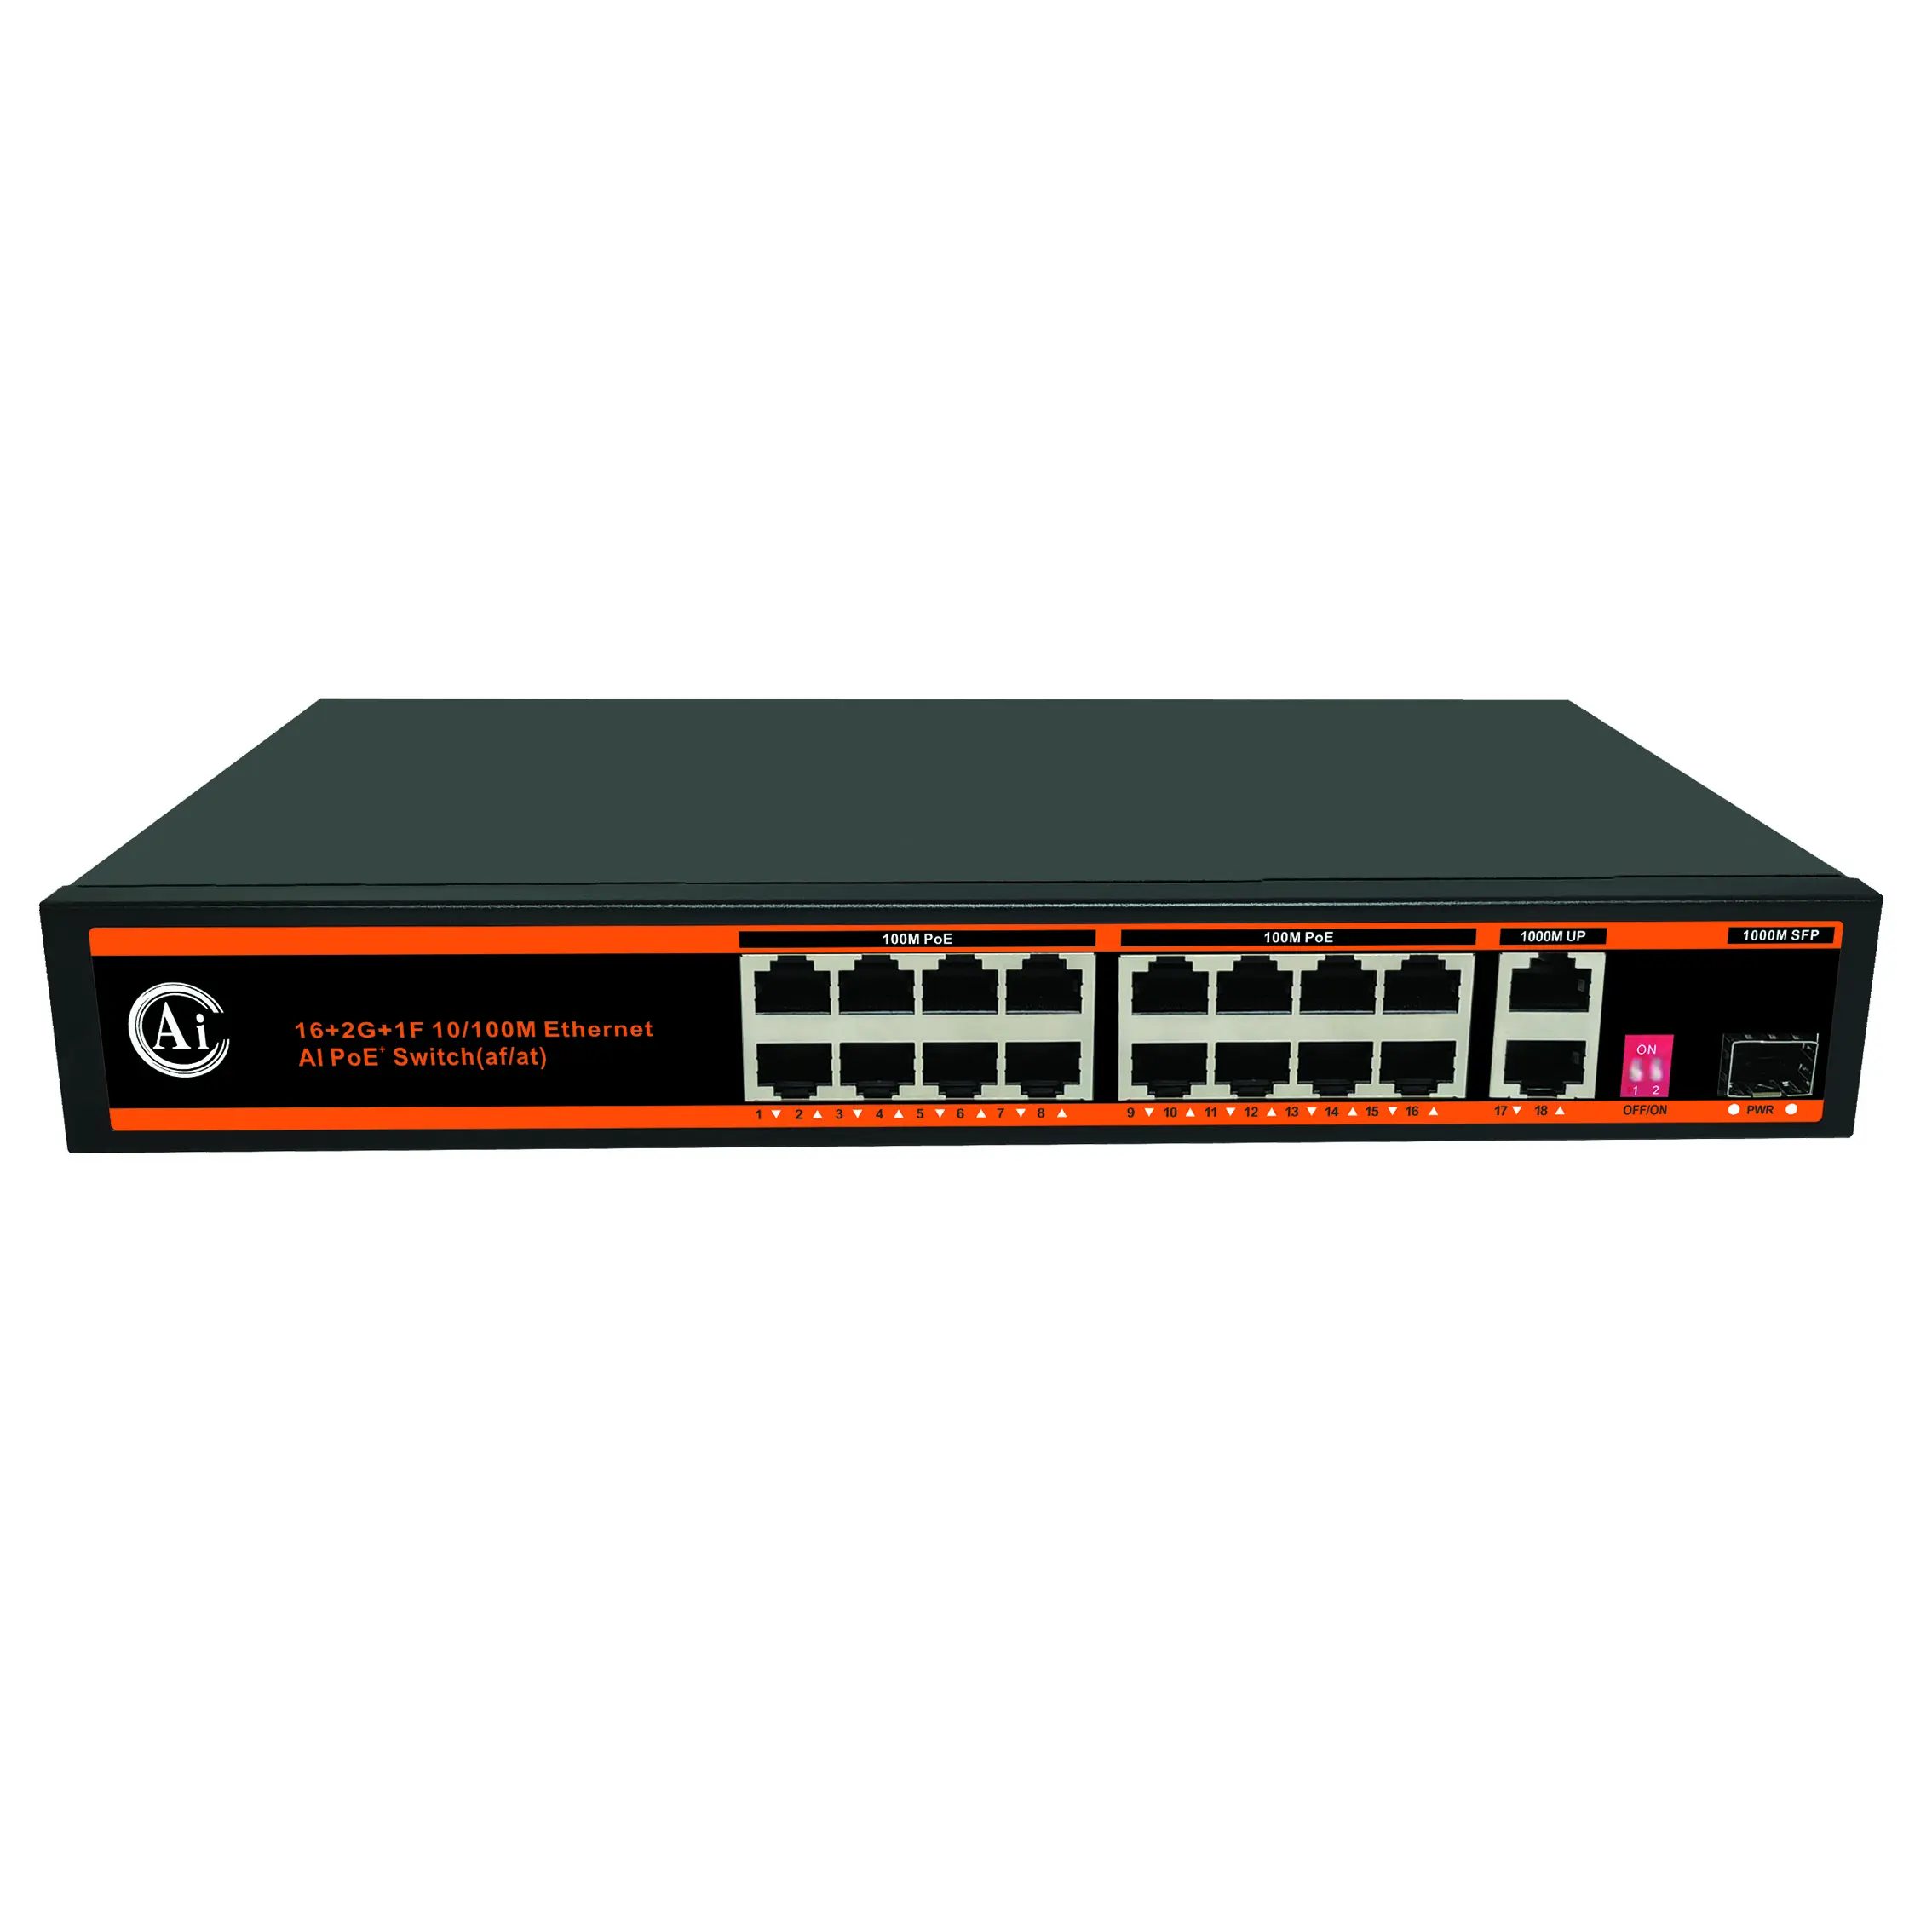 IEEE802.3af/at Ethernet 16 Port saklar jaringan PoE 48V 100M/Gigabit untuk kamera Ip